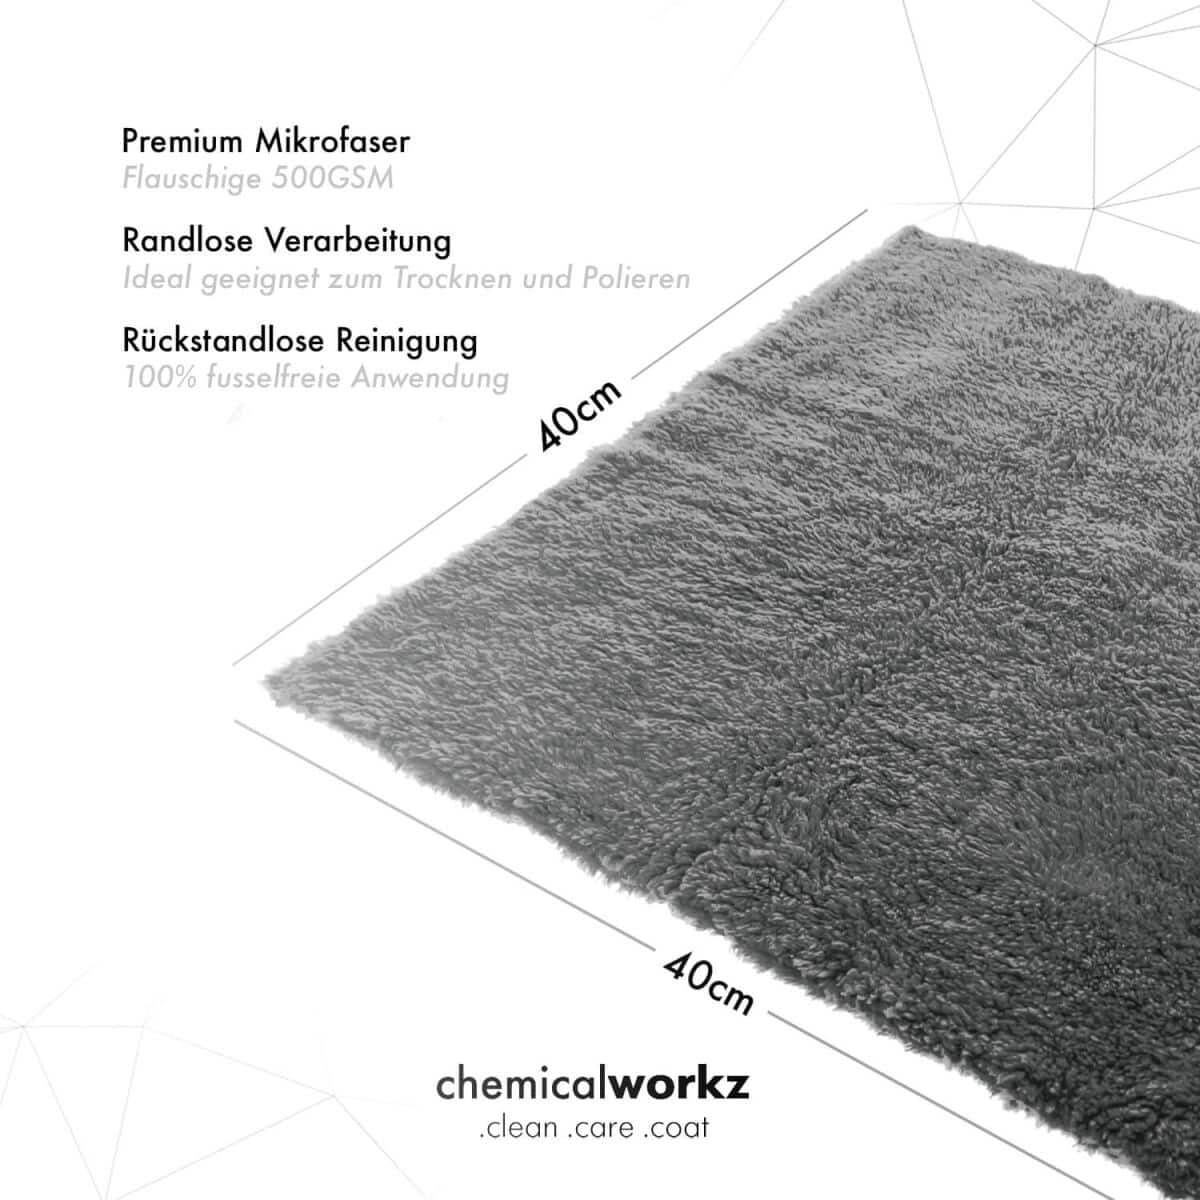 Chemicalworkz Edgeless Soft Touch Premium Poliertücher "KNALLBUNT" 500GSM 40×40 5 Stück